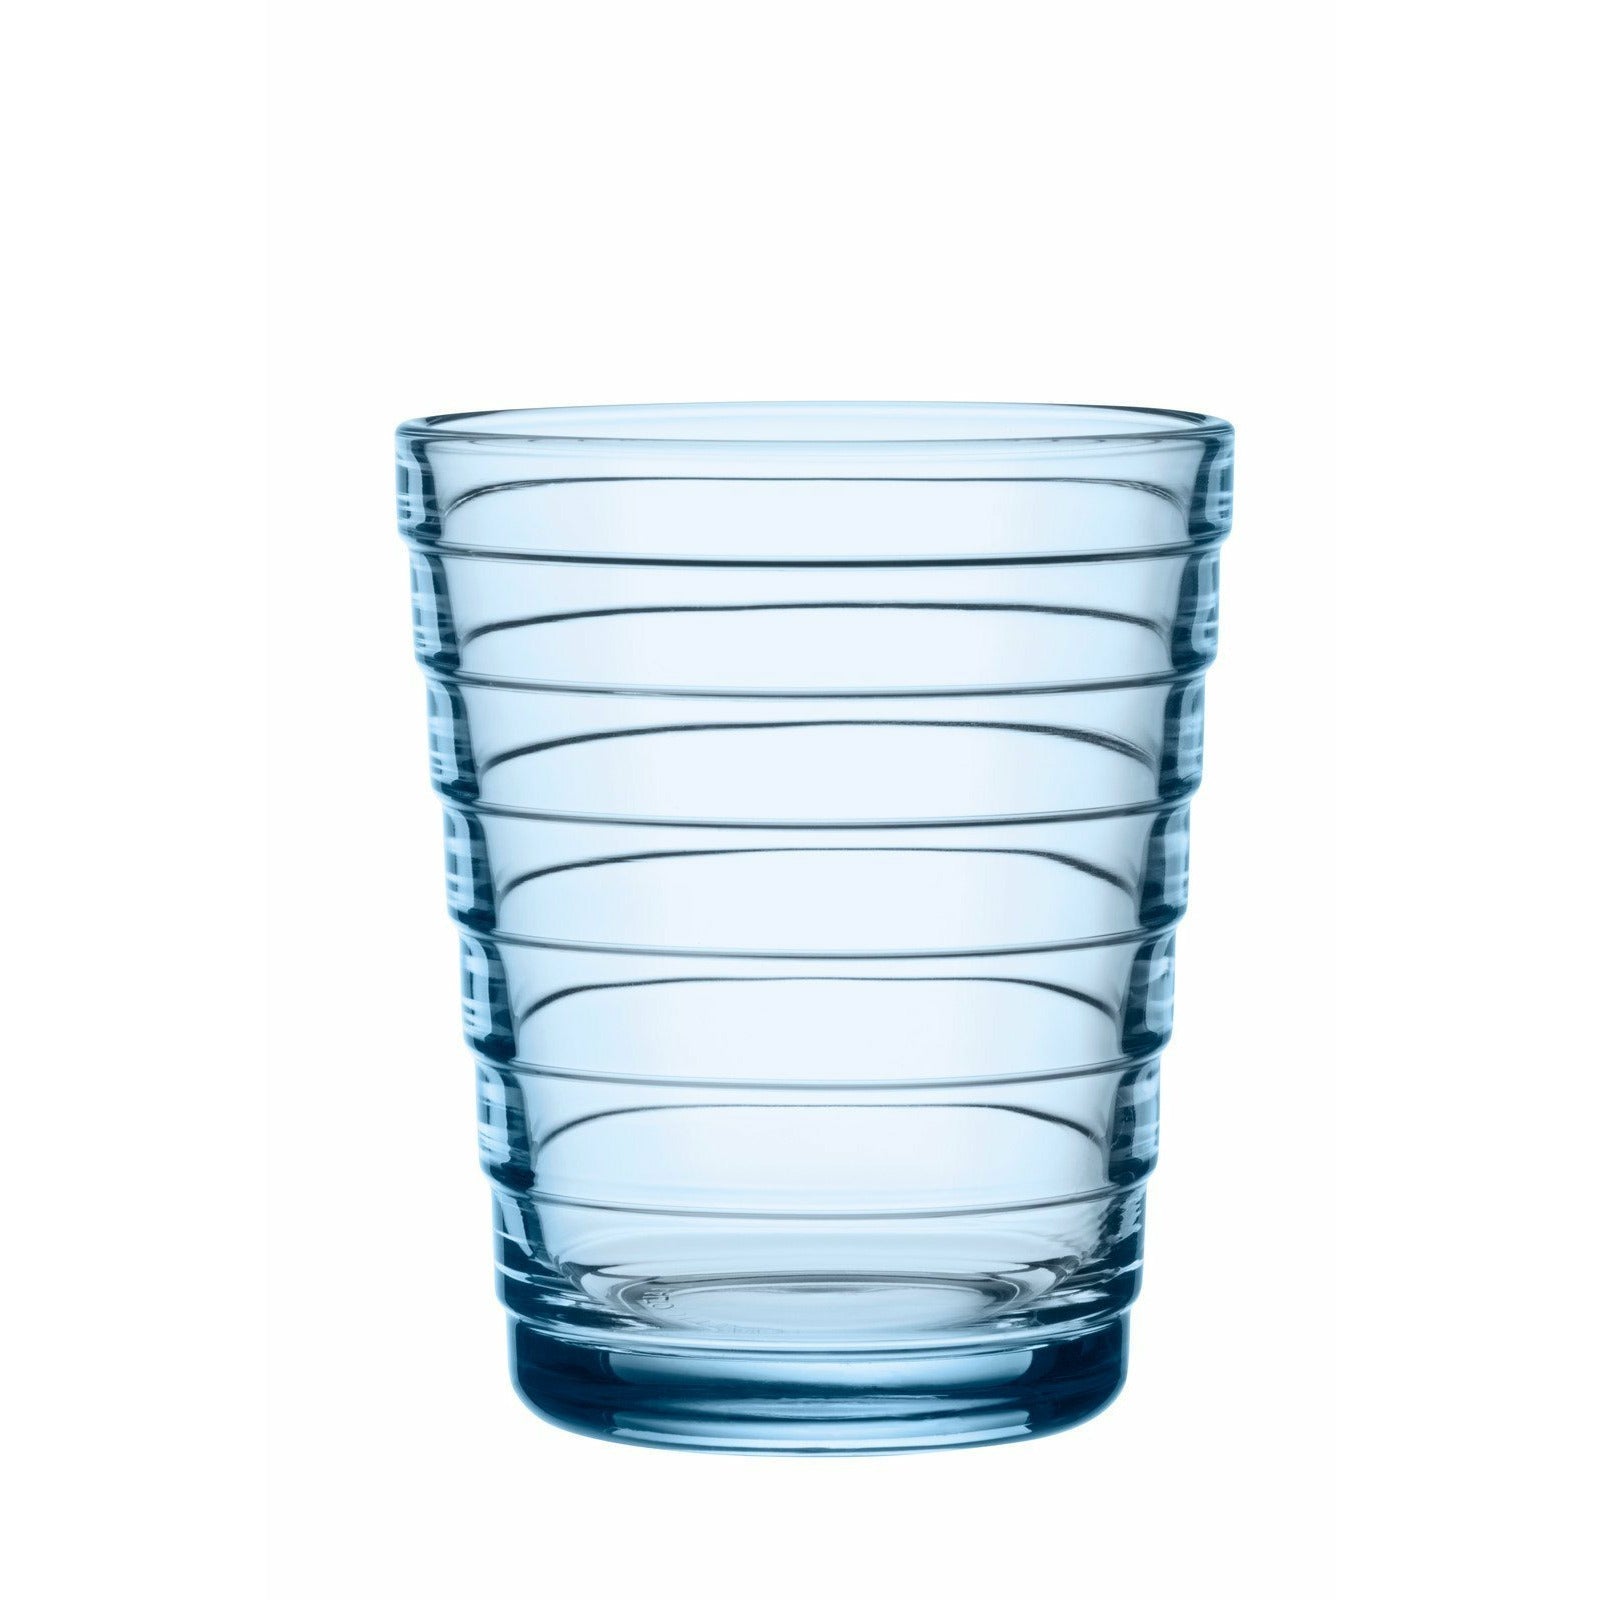 Iittala Aino Aalto Drinking Glass Aqua 22cl, 2pcs.